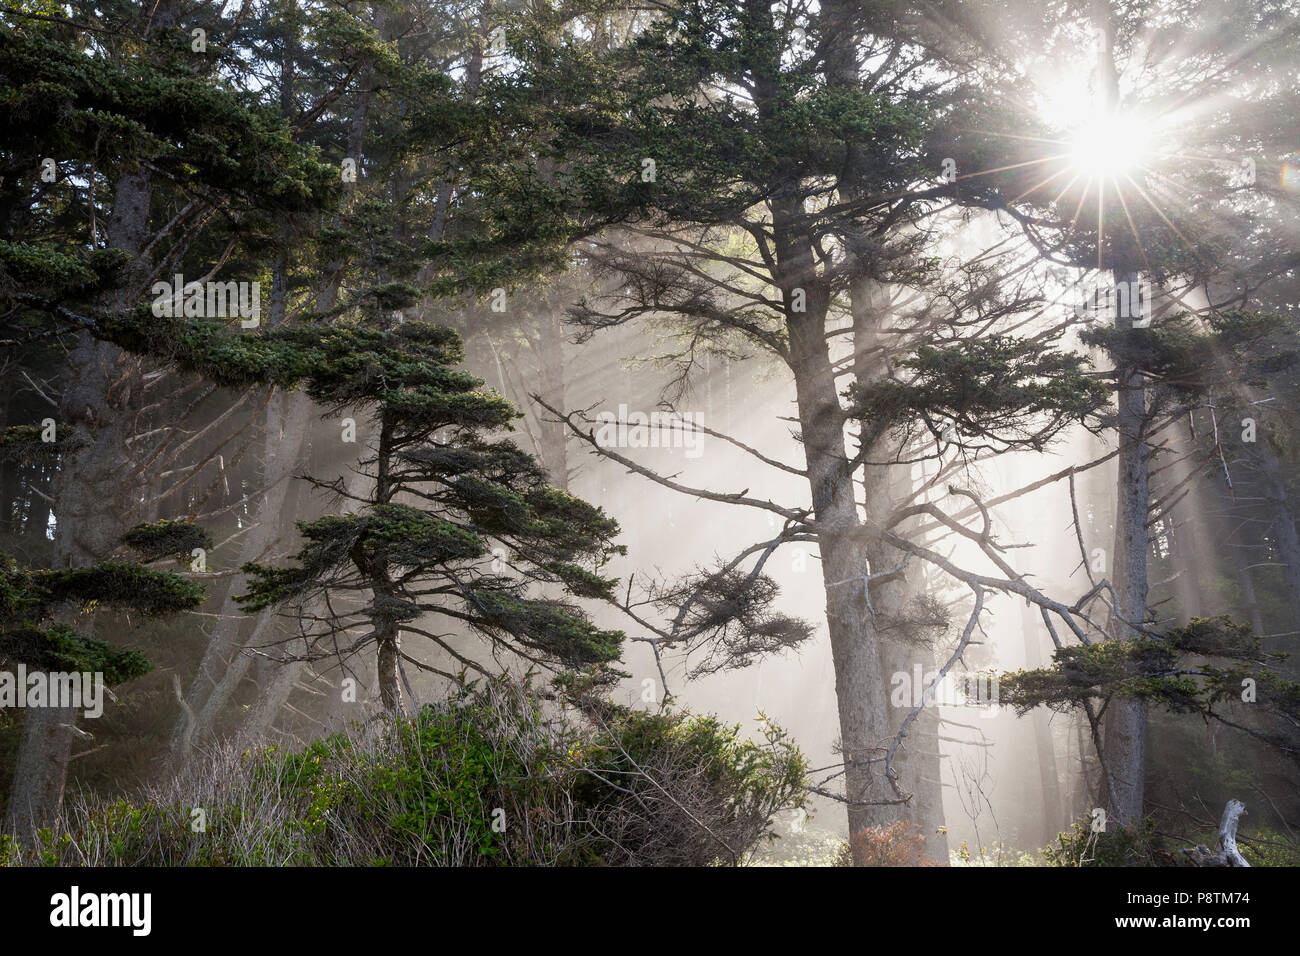 WA 14560-00 ... WASHINGTON - Sun Light streifen durch die Bäume entlang Rialito Strand in Olympic National Park. Stockfoto